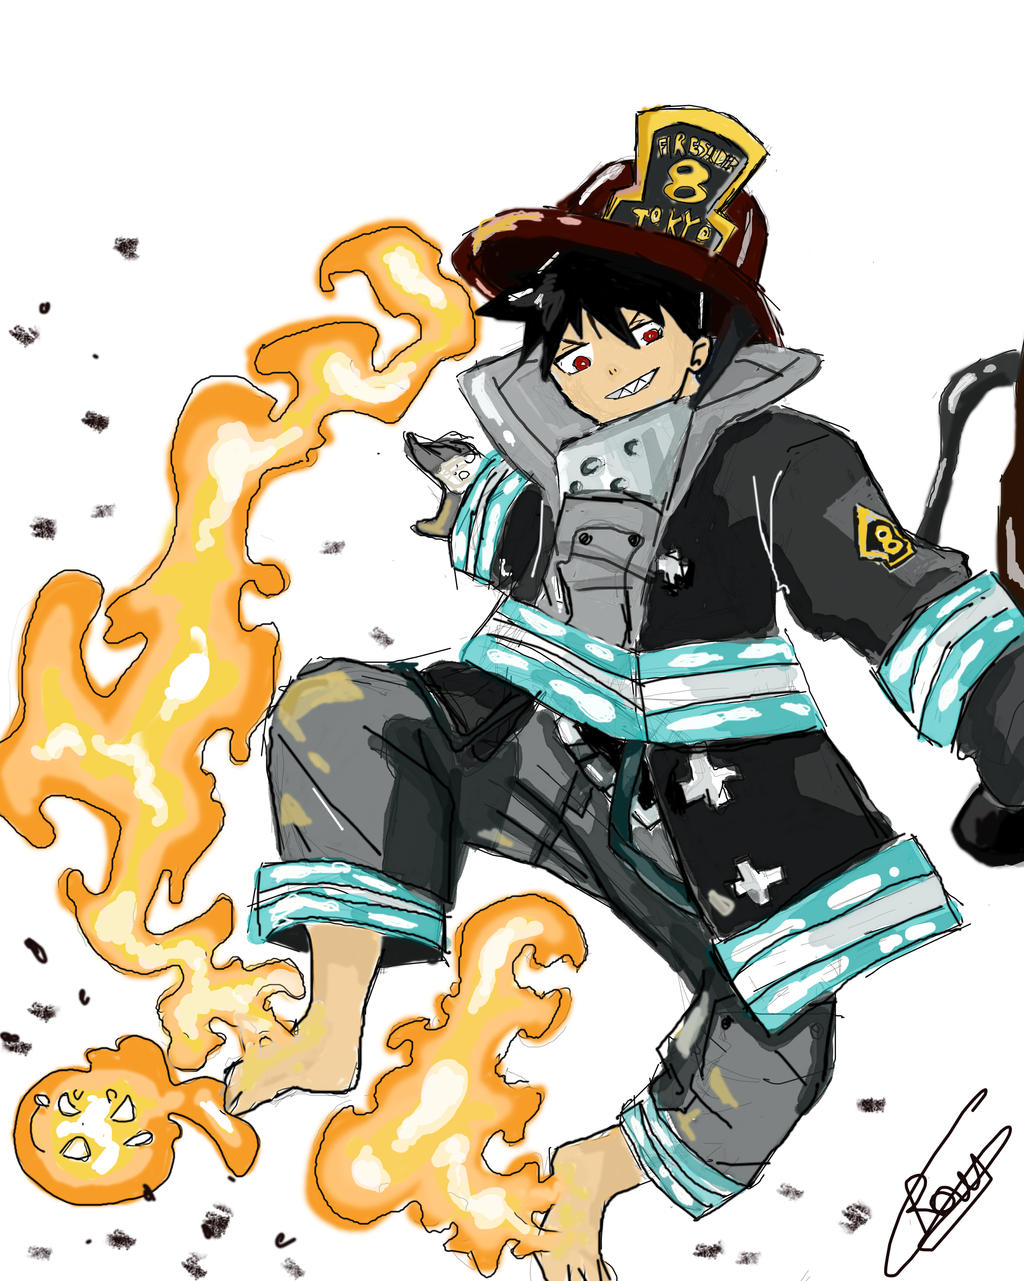 TANAKI E SEU IMA DA LUXURIA _FIRE FORCE #fireforce #shinra #anime